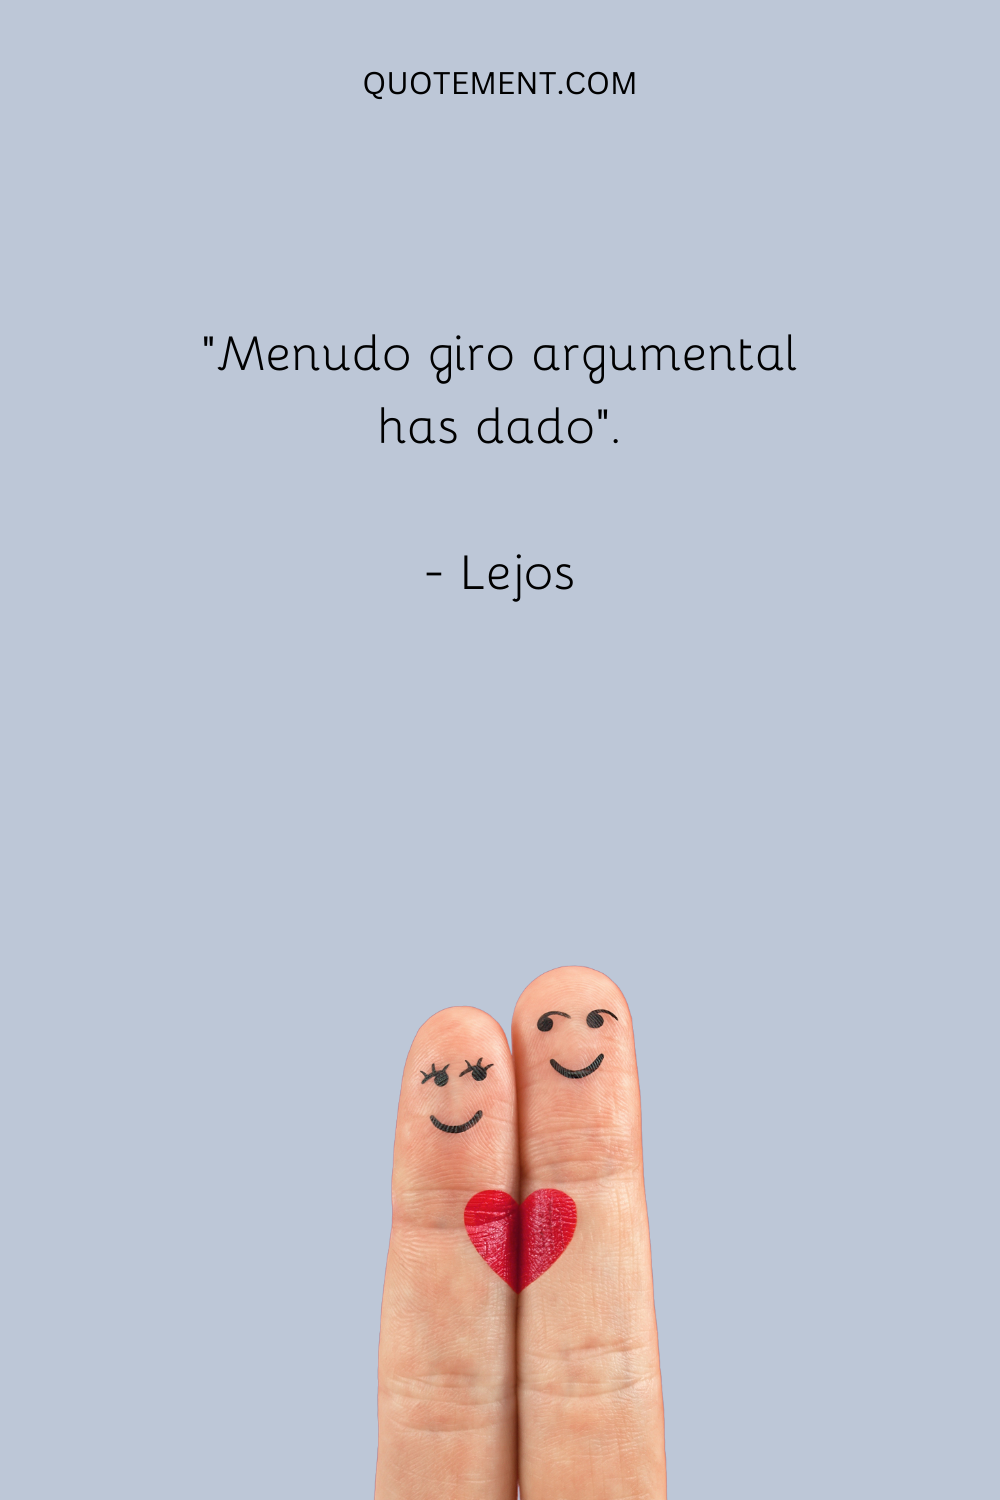 "Menudo giro argumental has dado". - Lejos